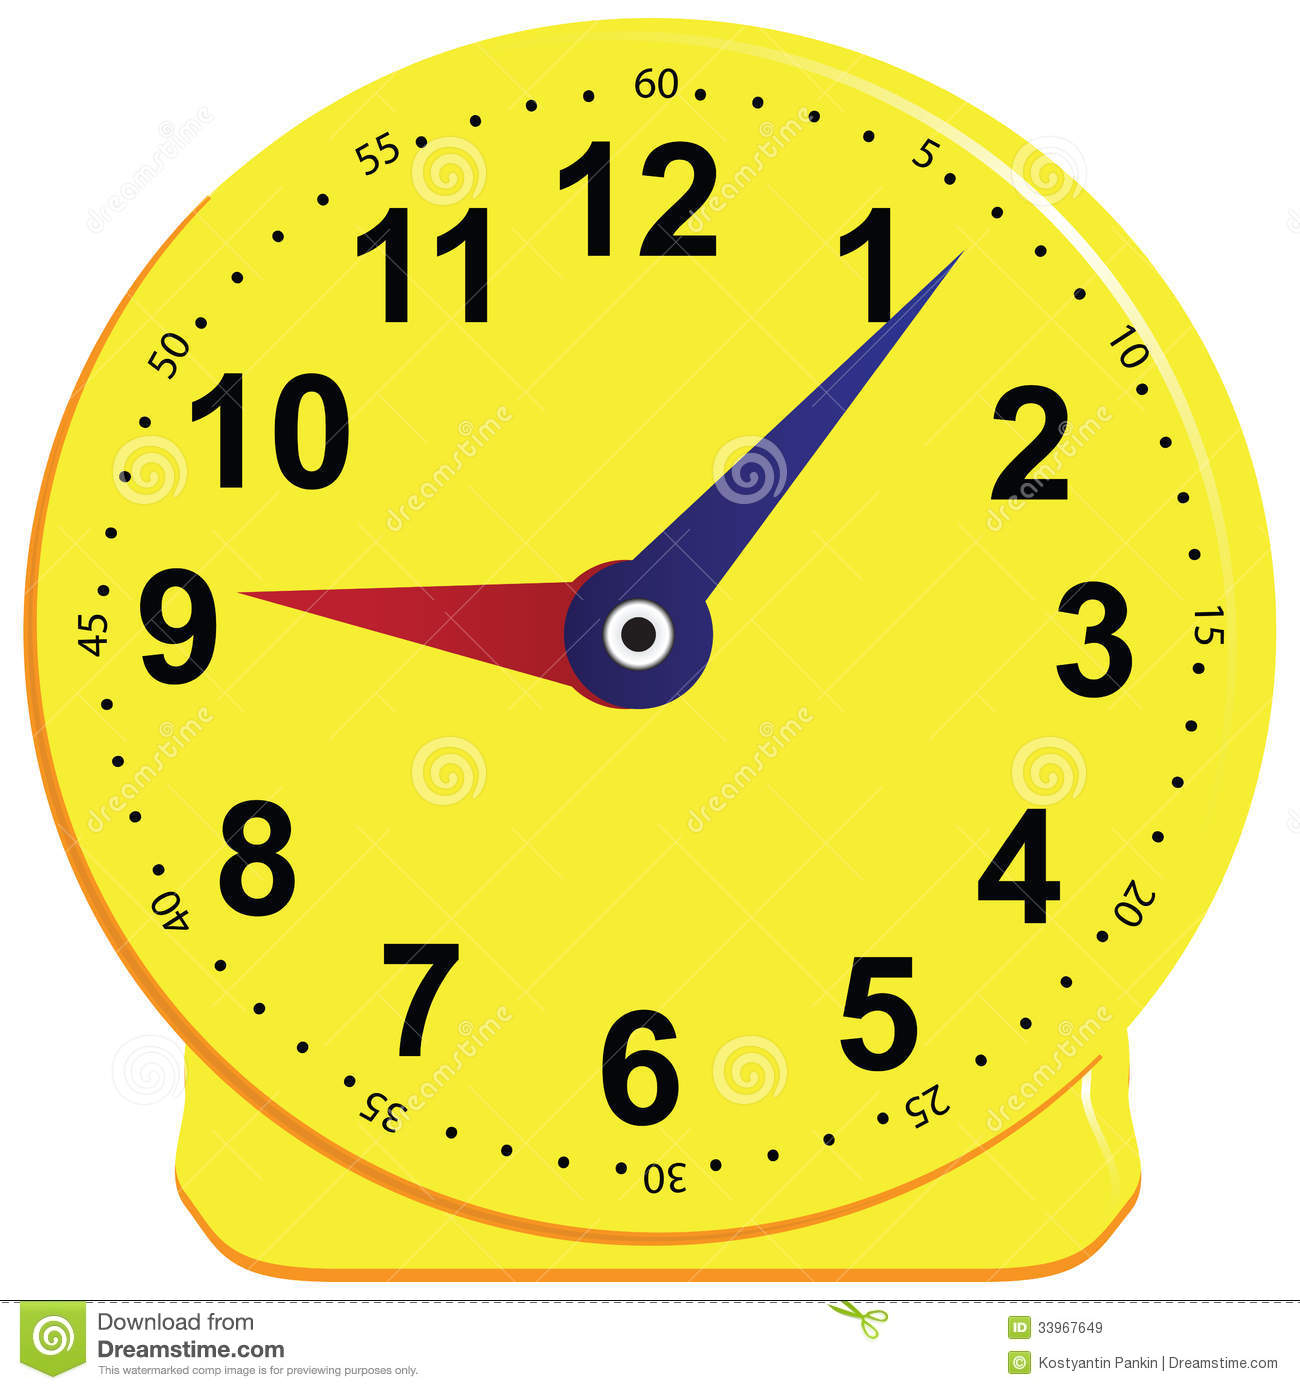 Clocks clipart - Clipground